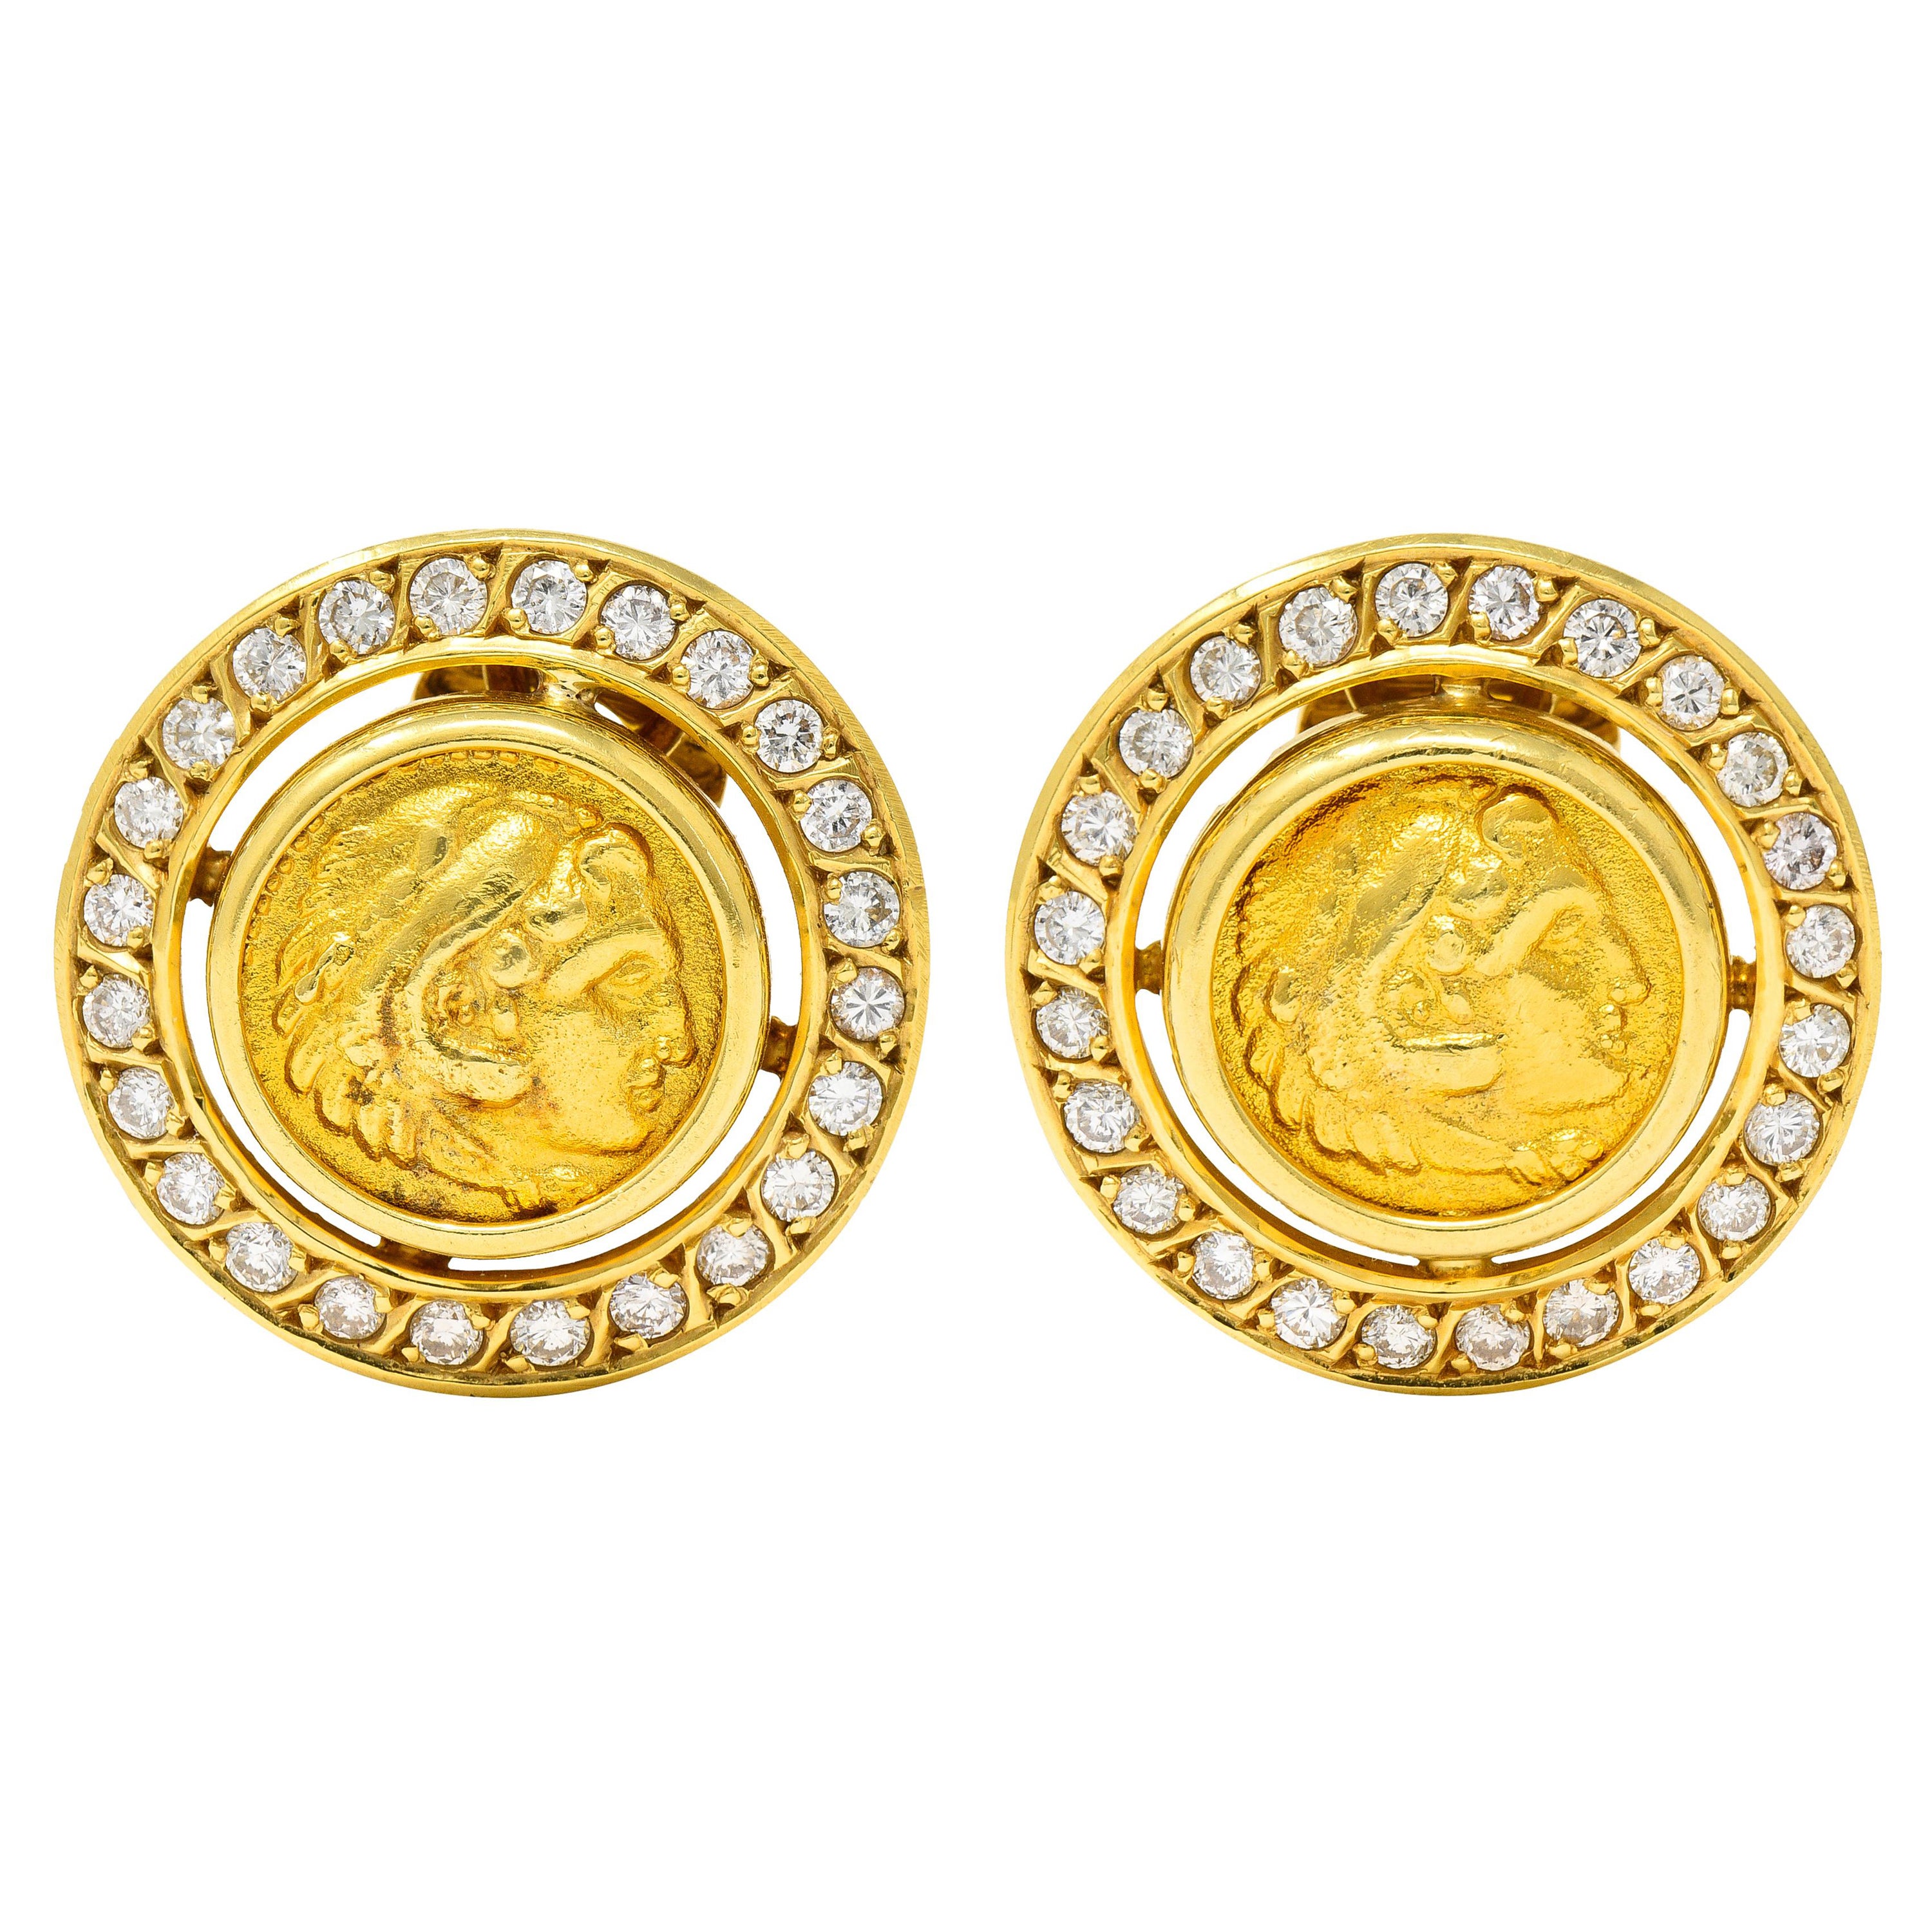 Vintage 1.44 Carats Diamond 18 Karat Yellow Gold Ancient Coin Earrings